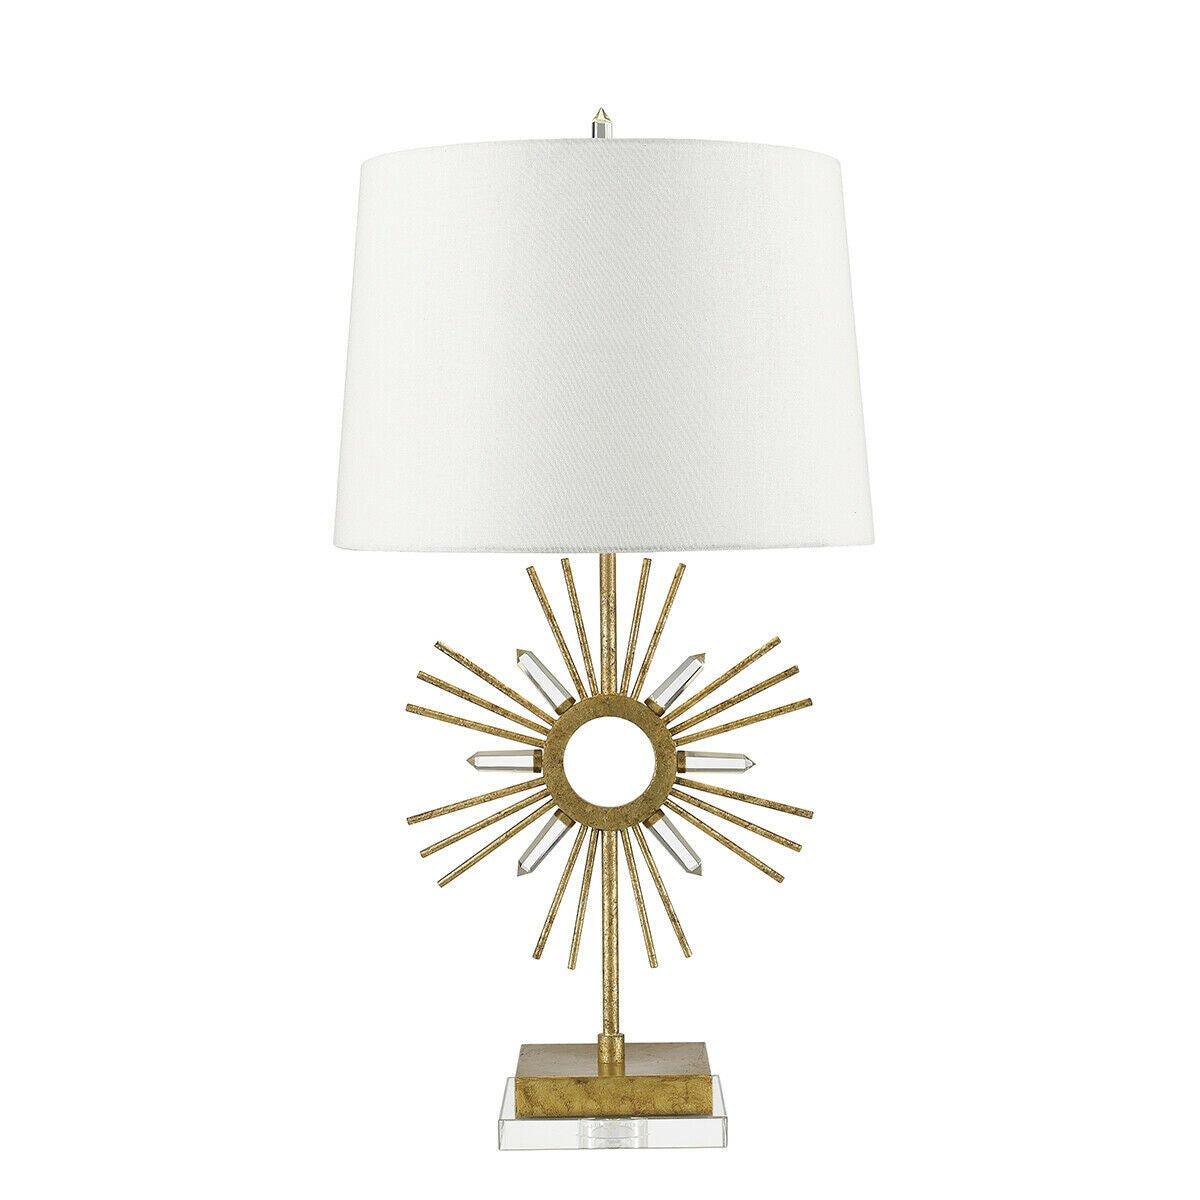 Square Table Lamp Cream Shade Distressed Gold LED E27 100W Bulb d01096